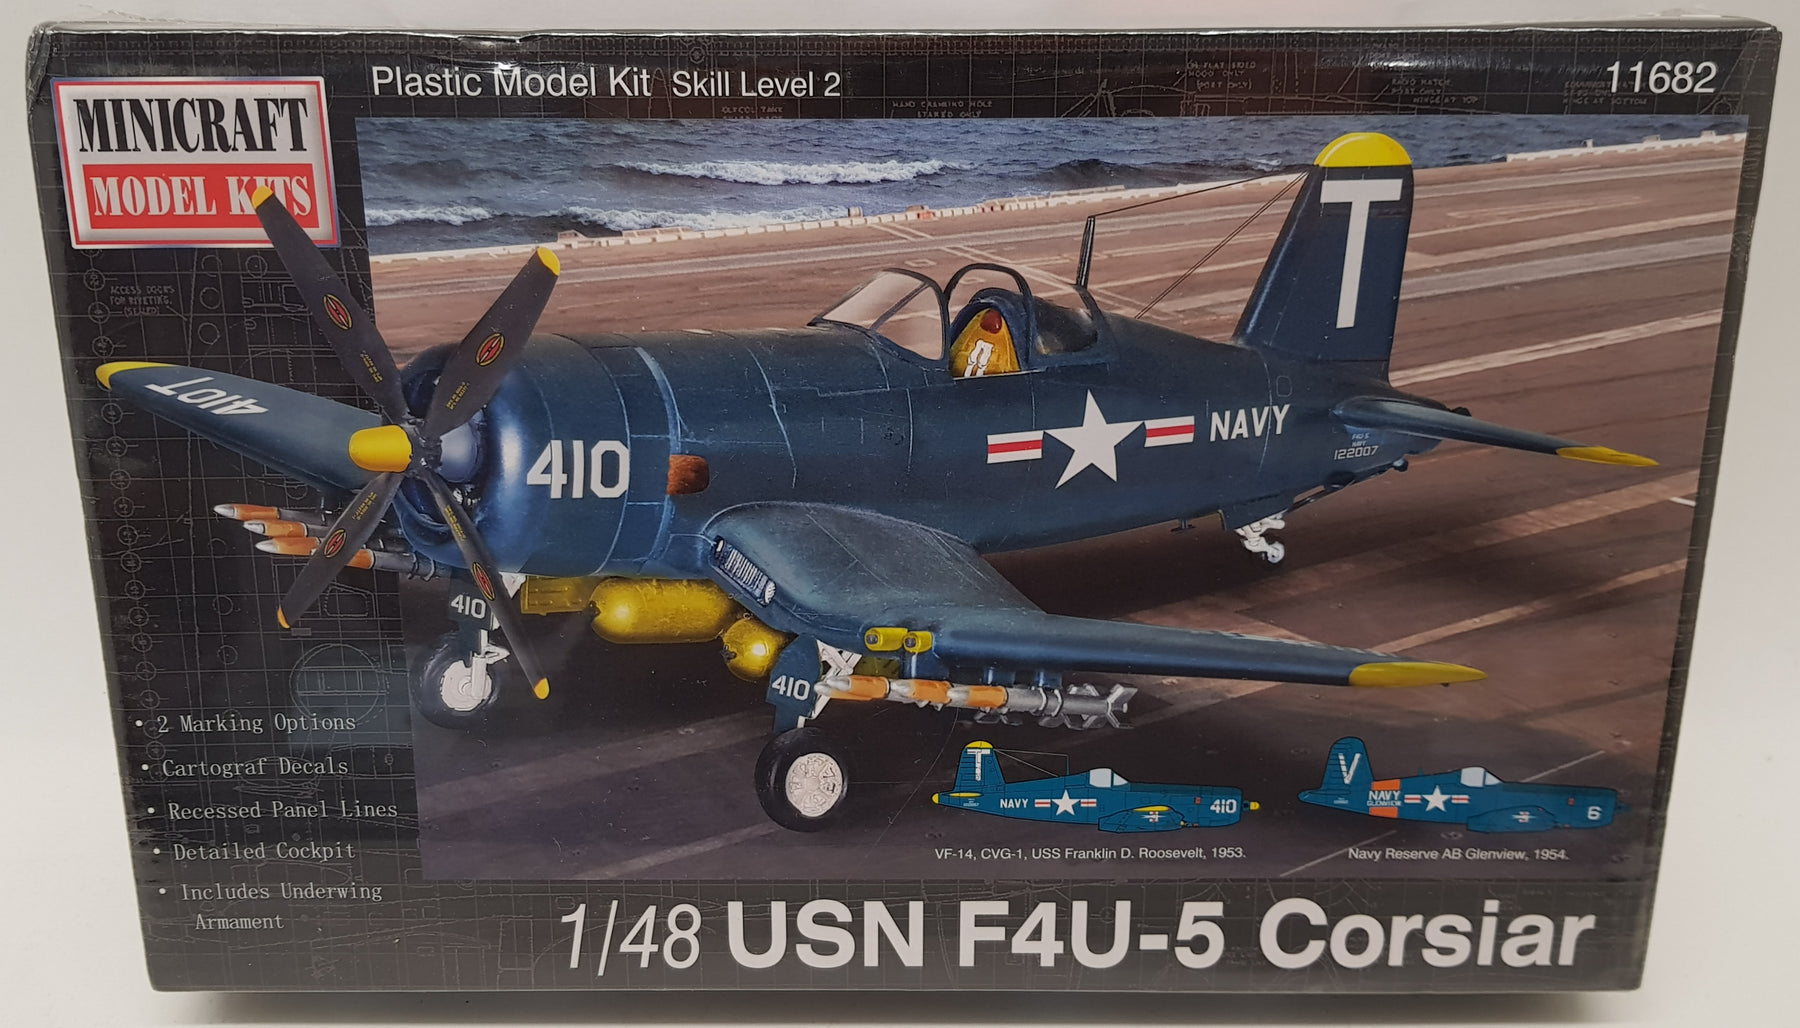 Minicraft Model Aircraft Kit 11682 - 1/48 Scale USN F4U-5 Corsair